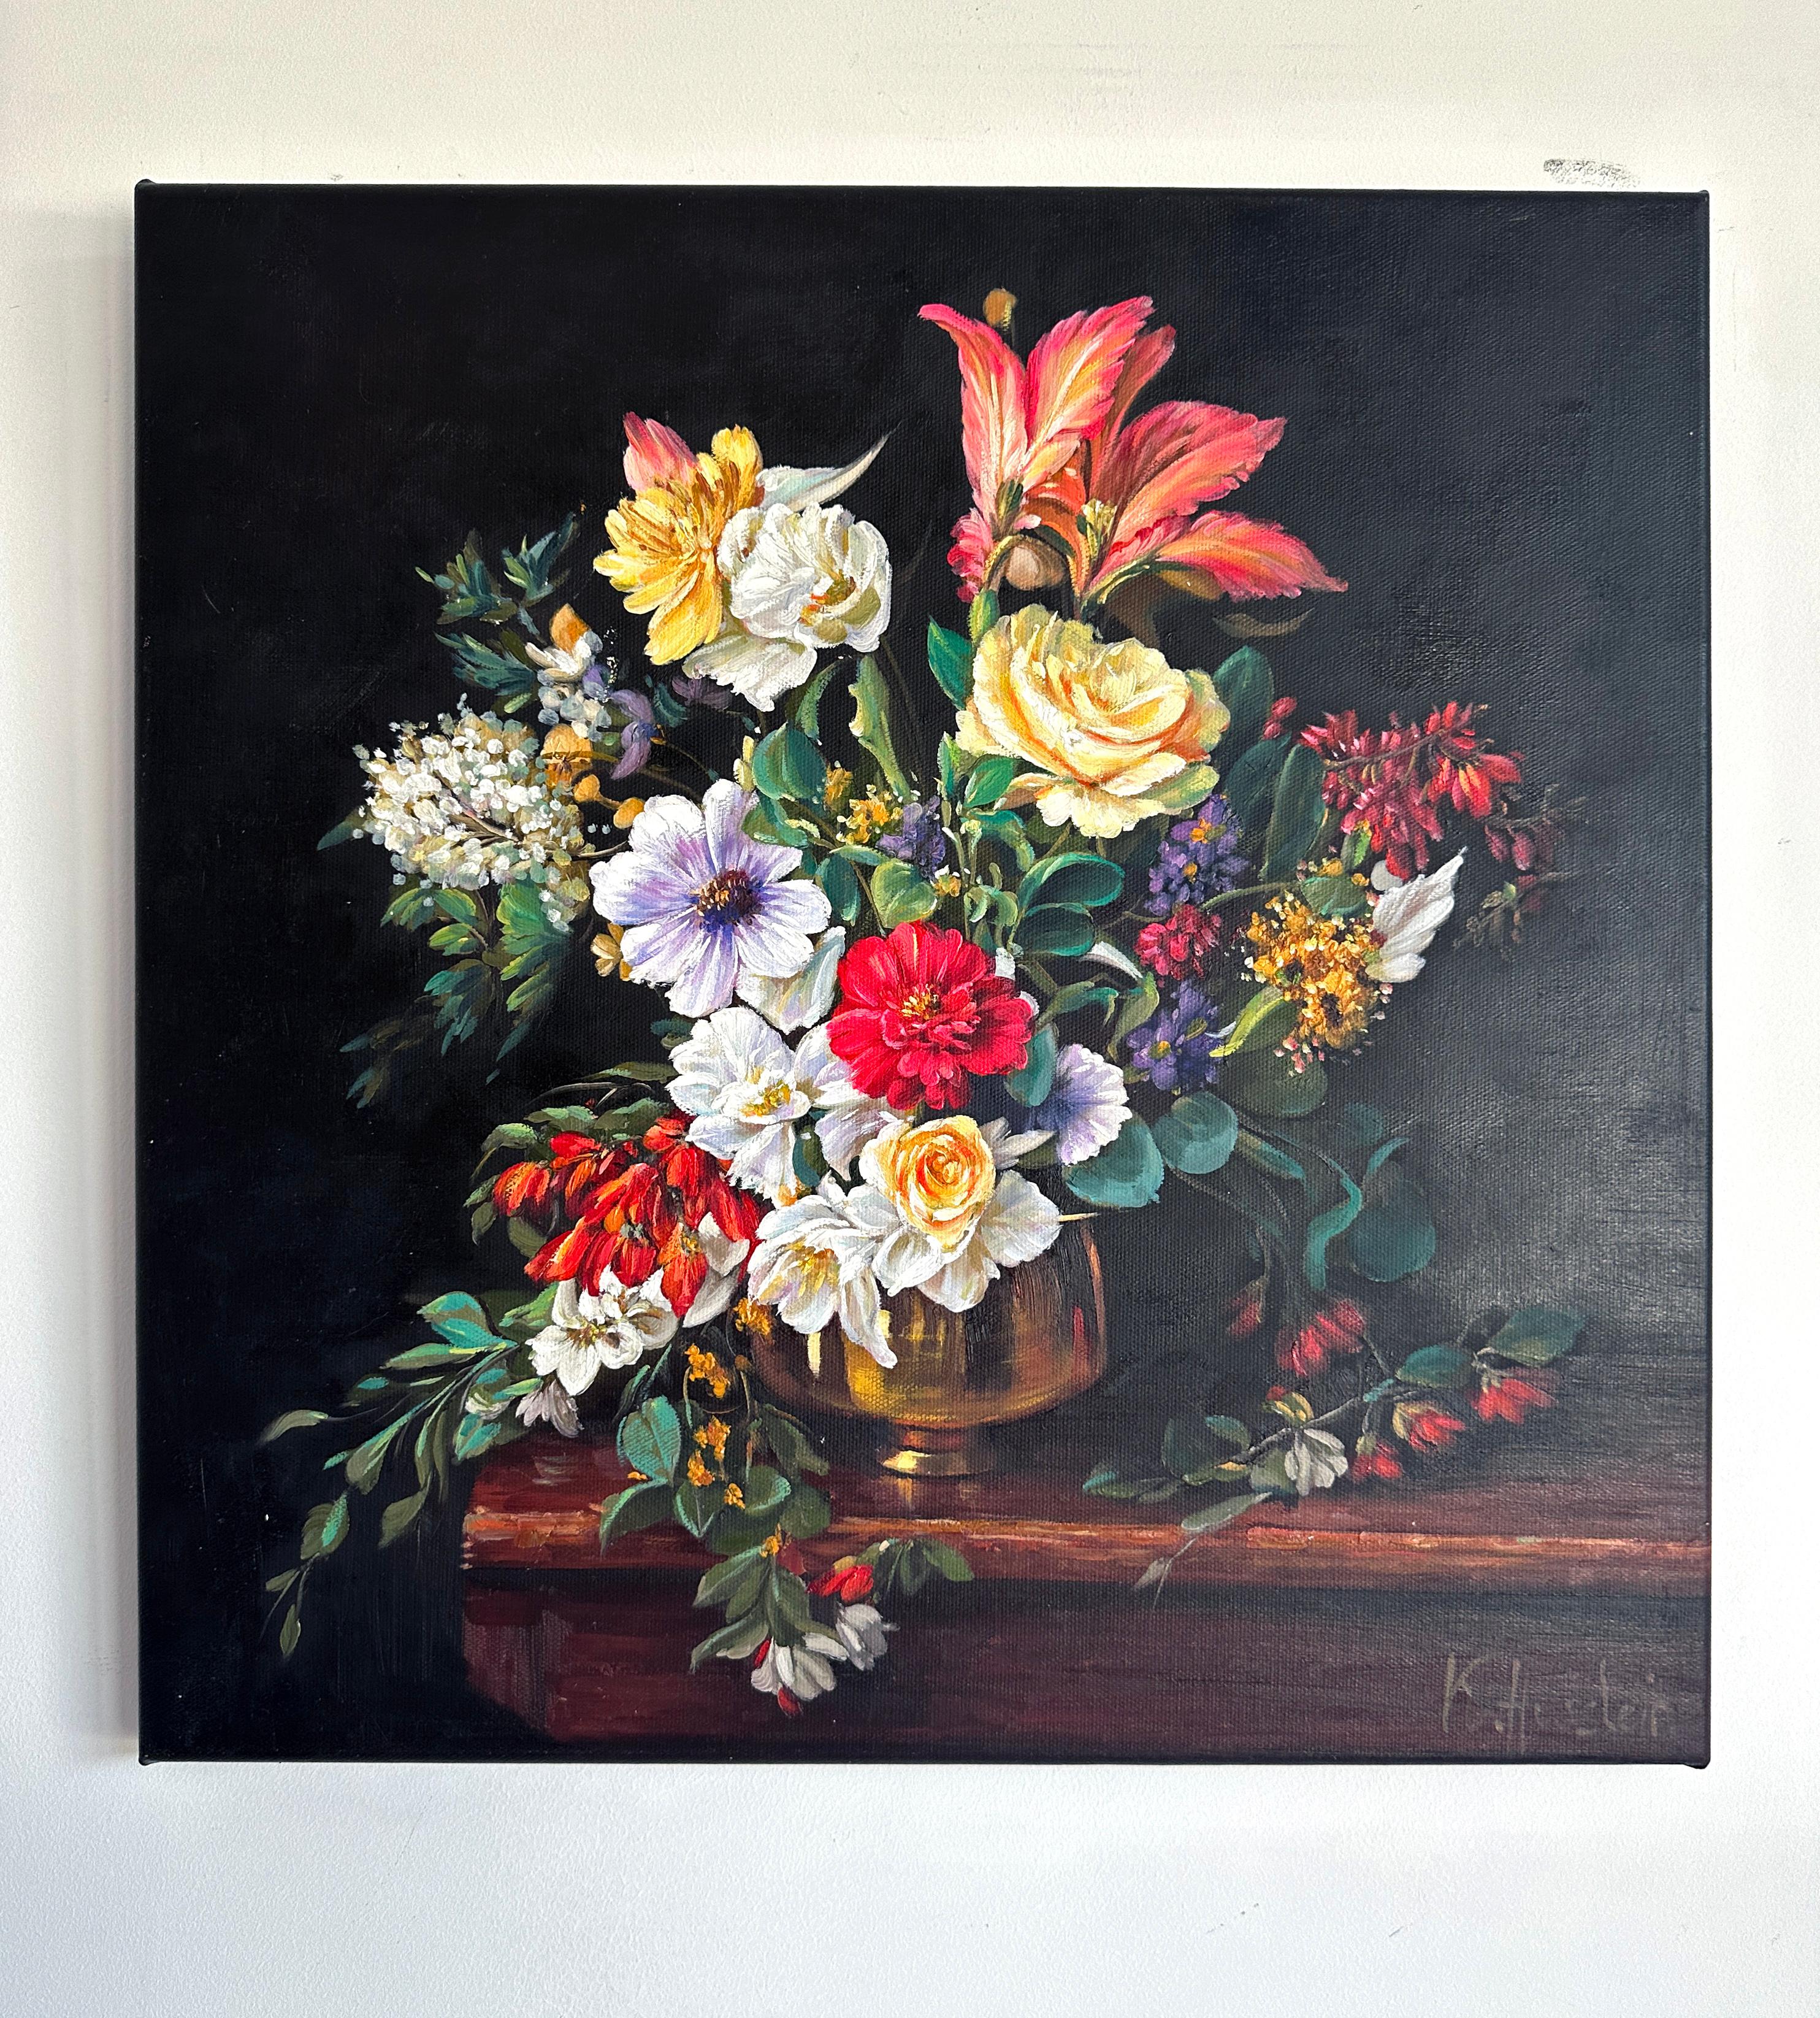 Heart over Head - Katharina Husslein Contemporary Flower Still life Oil Painting 1